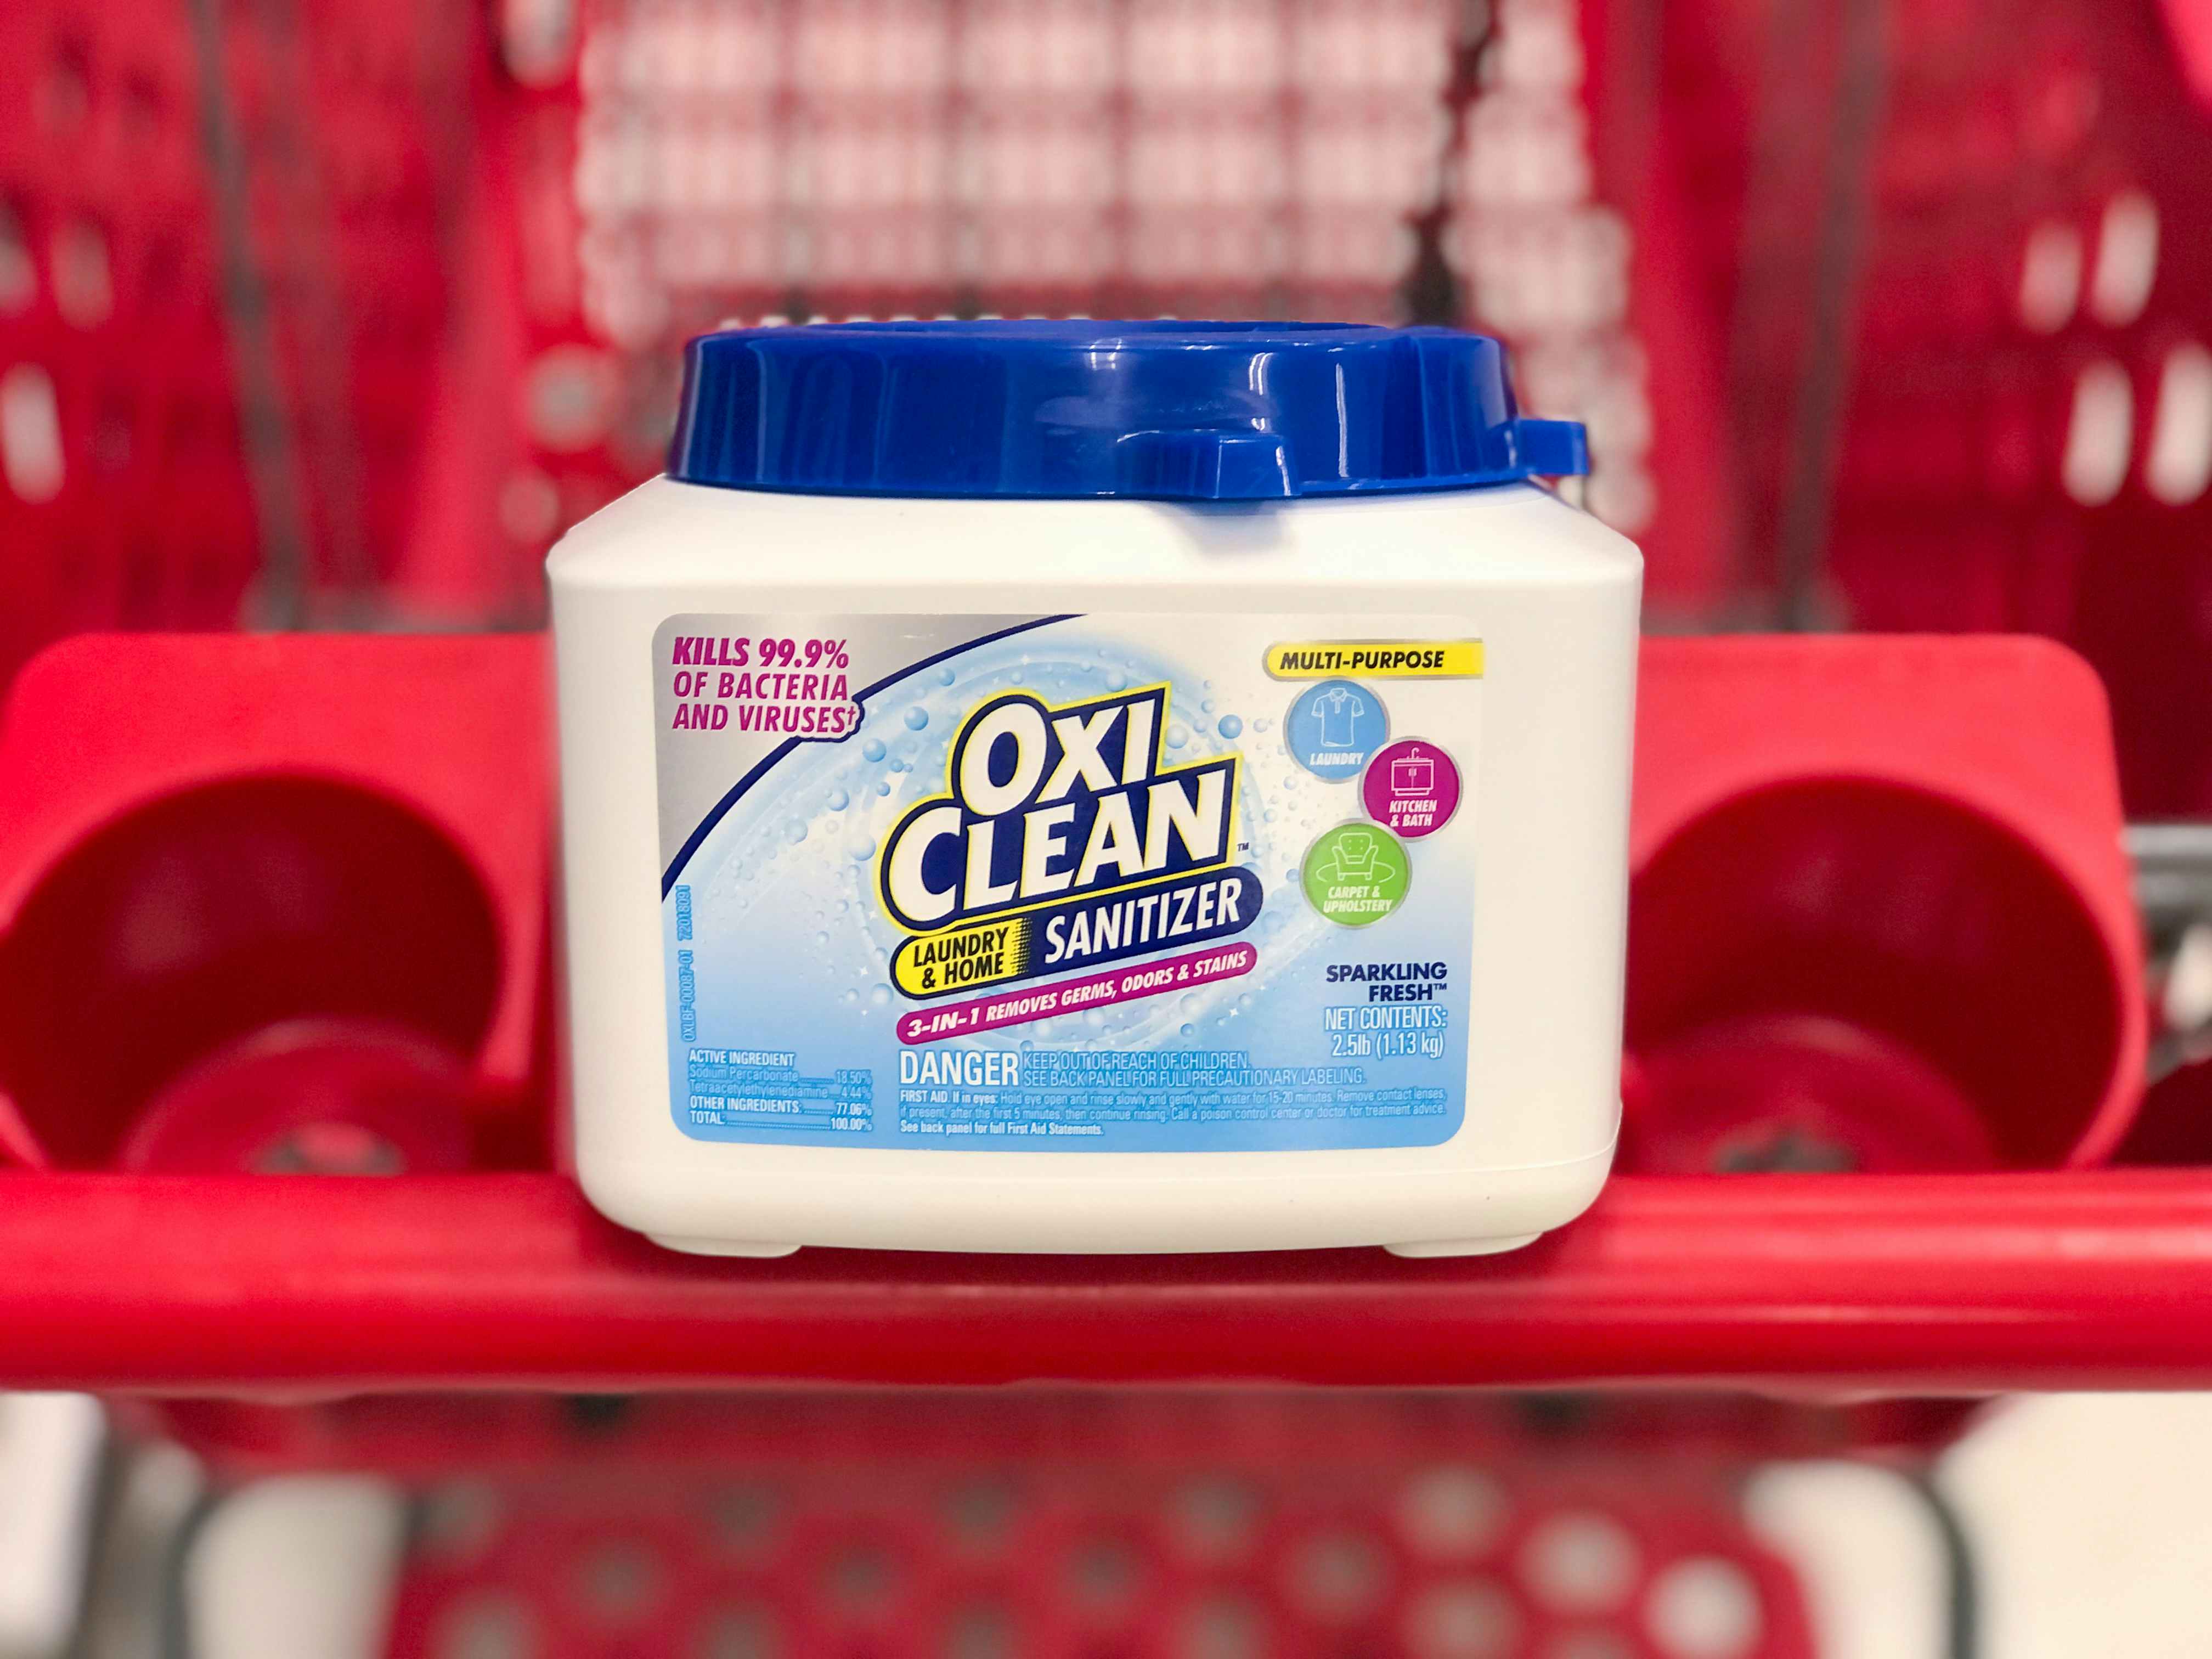 tub of Oxi Clean sanitizer in Target shopping cart